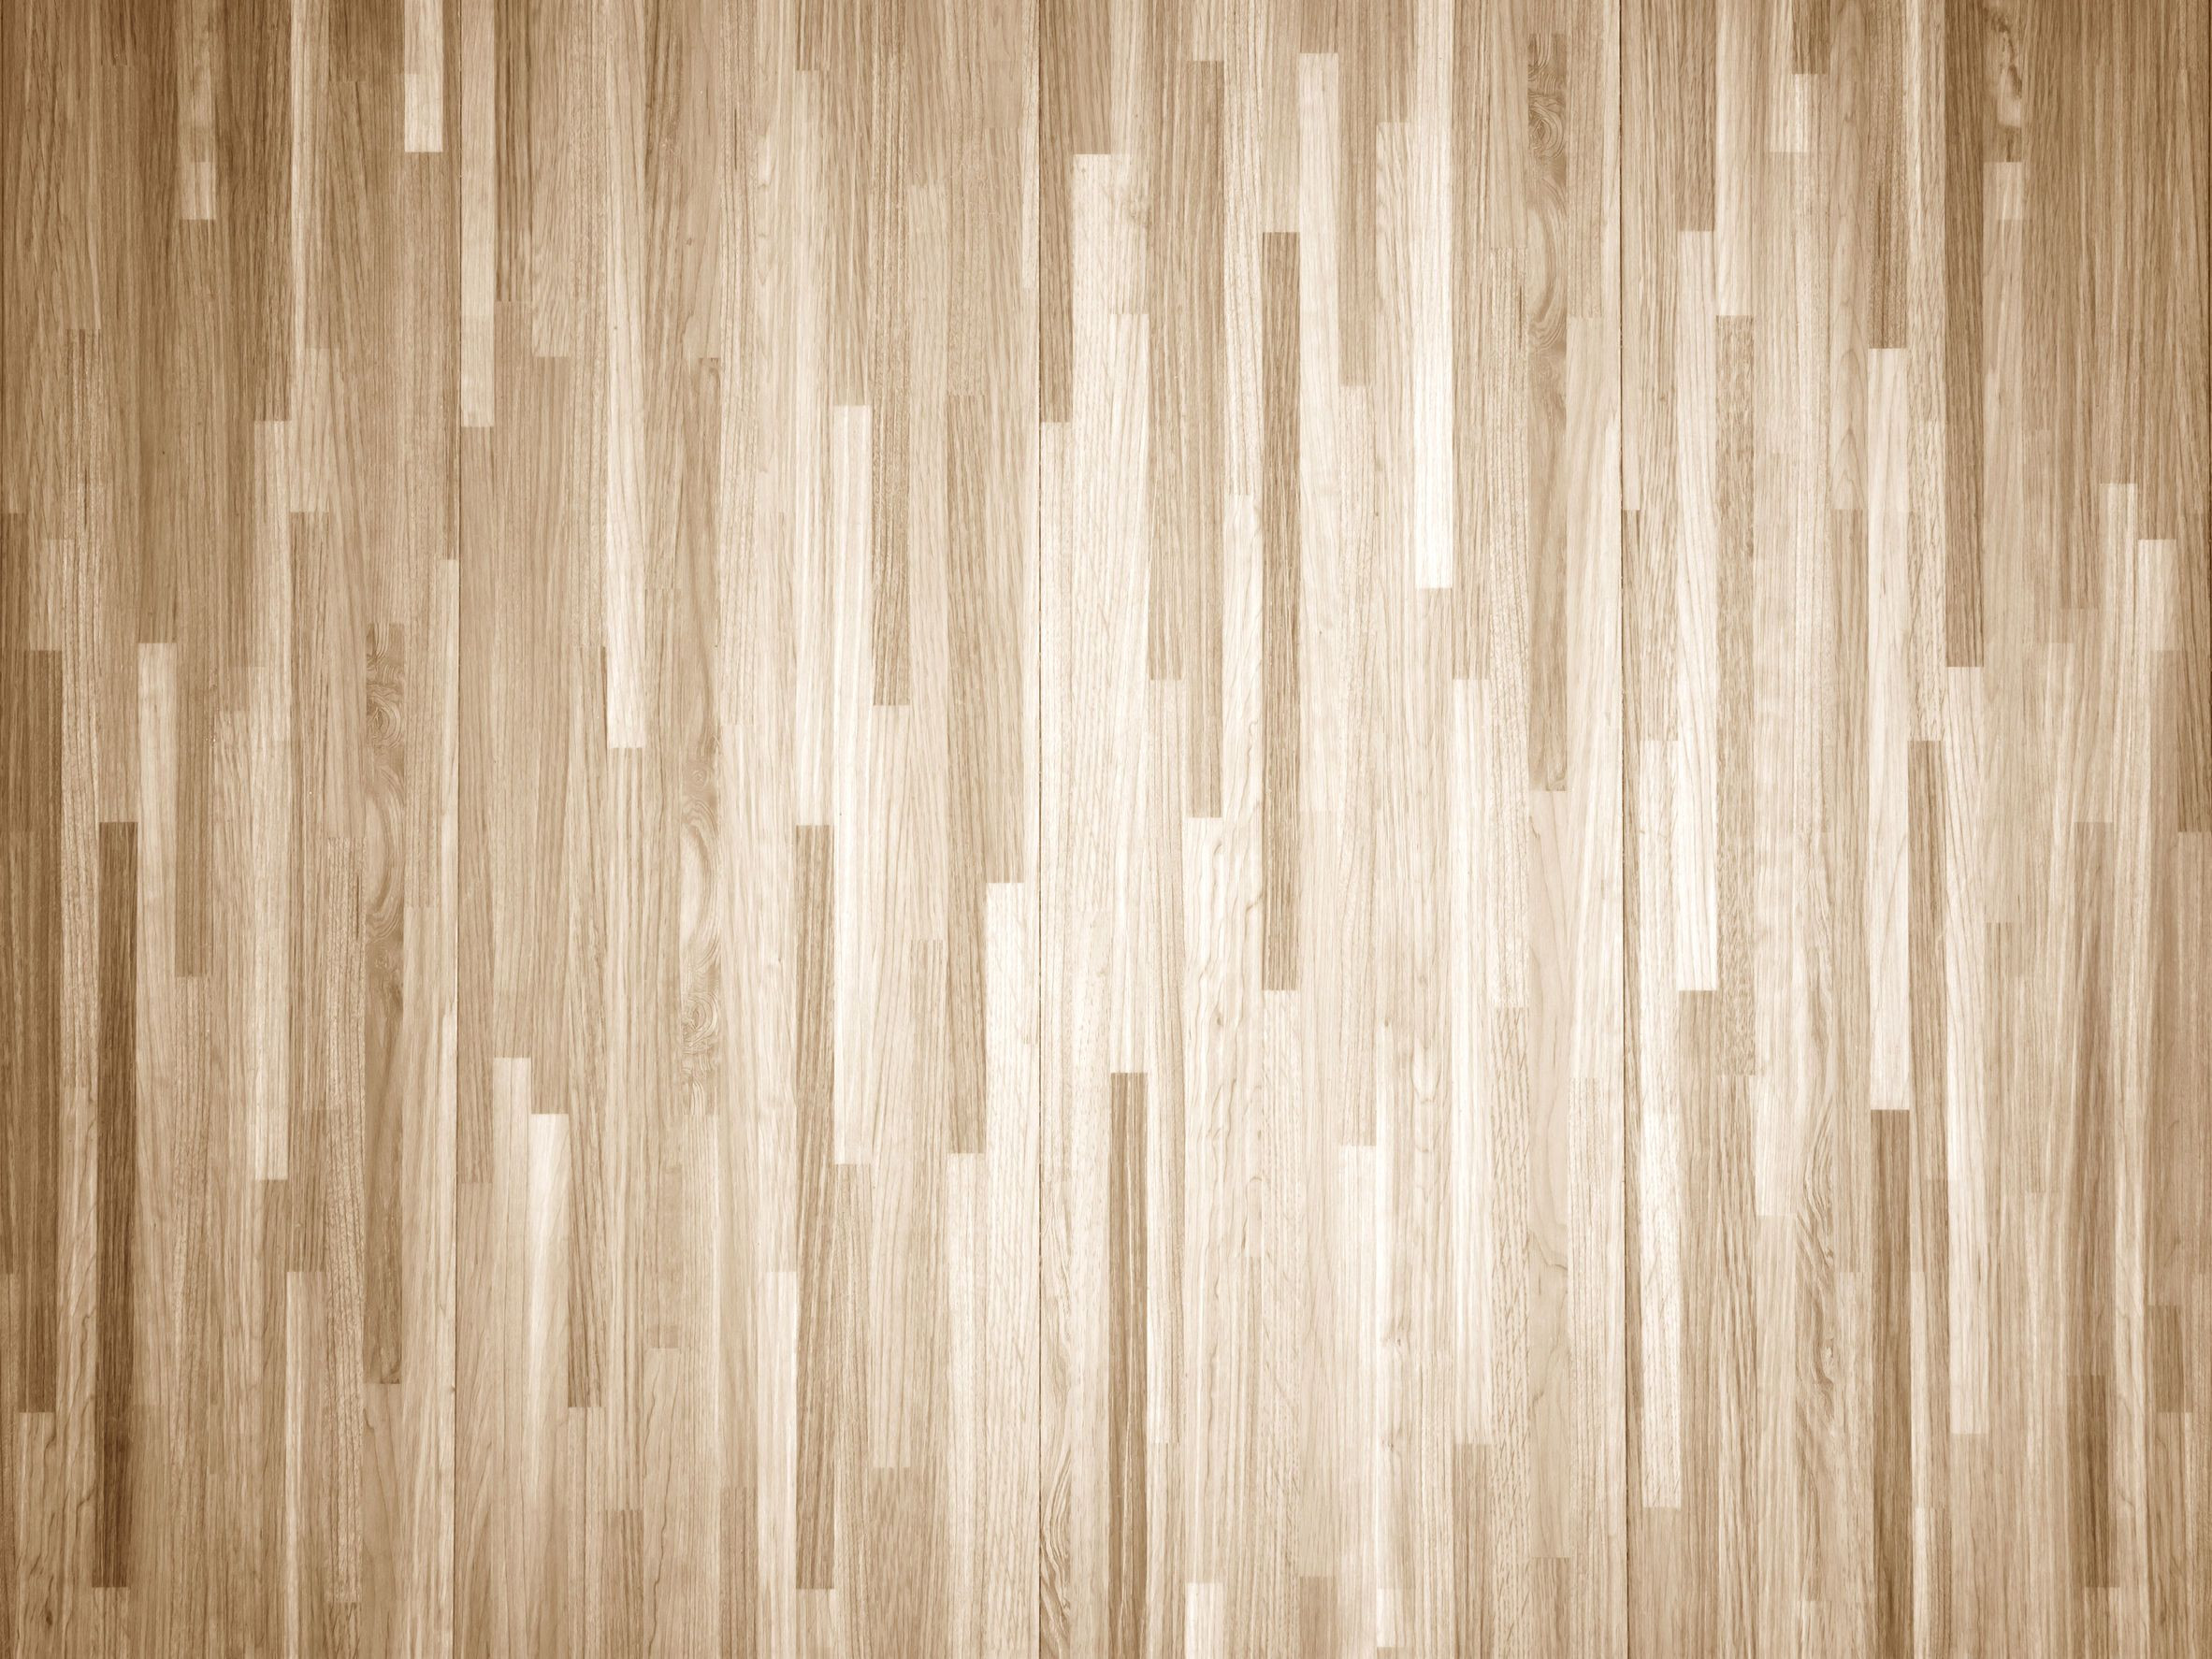 13 Stylish Hardwood Floor Cleaning Cost 2024 free download hardwood floor cleaning cost of how to chemically strip wood floors woodfloordoctor com throughout you